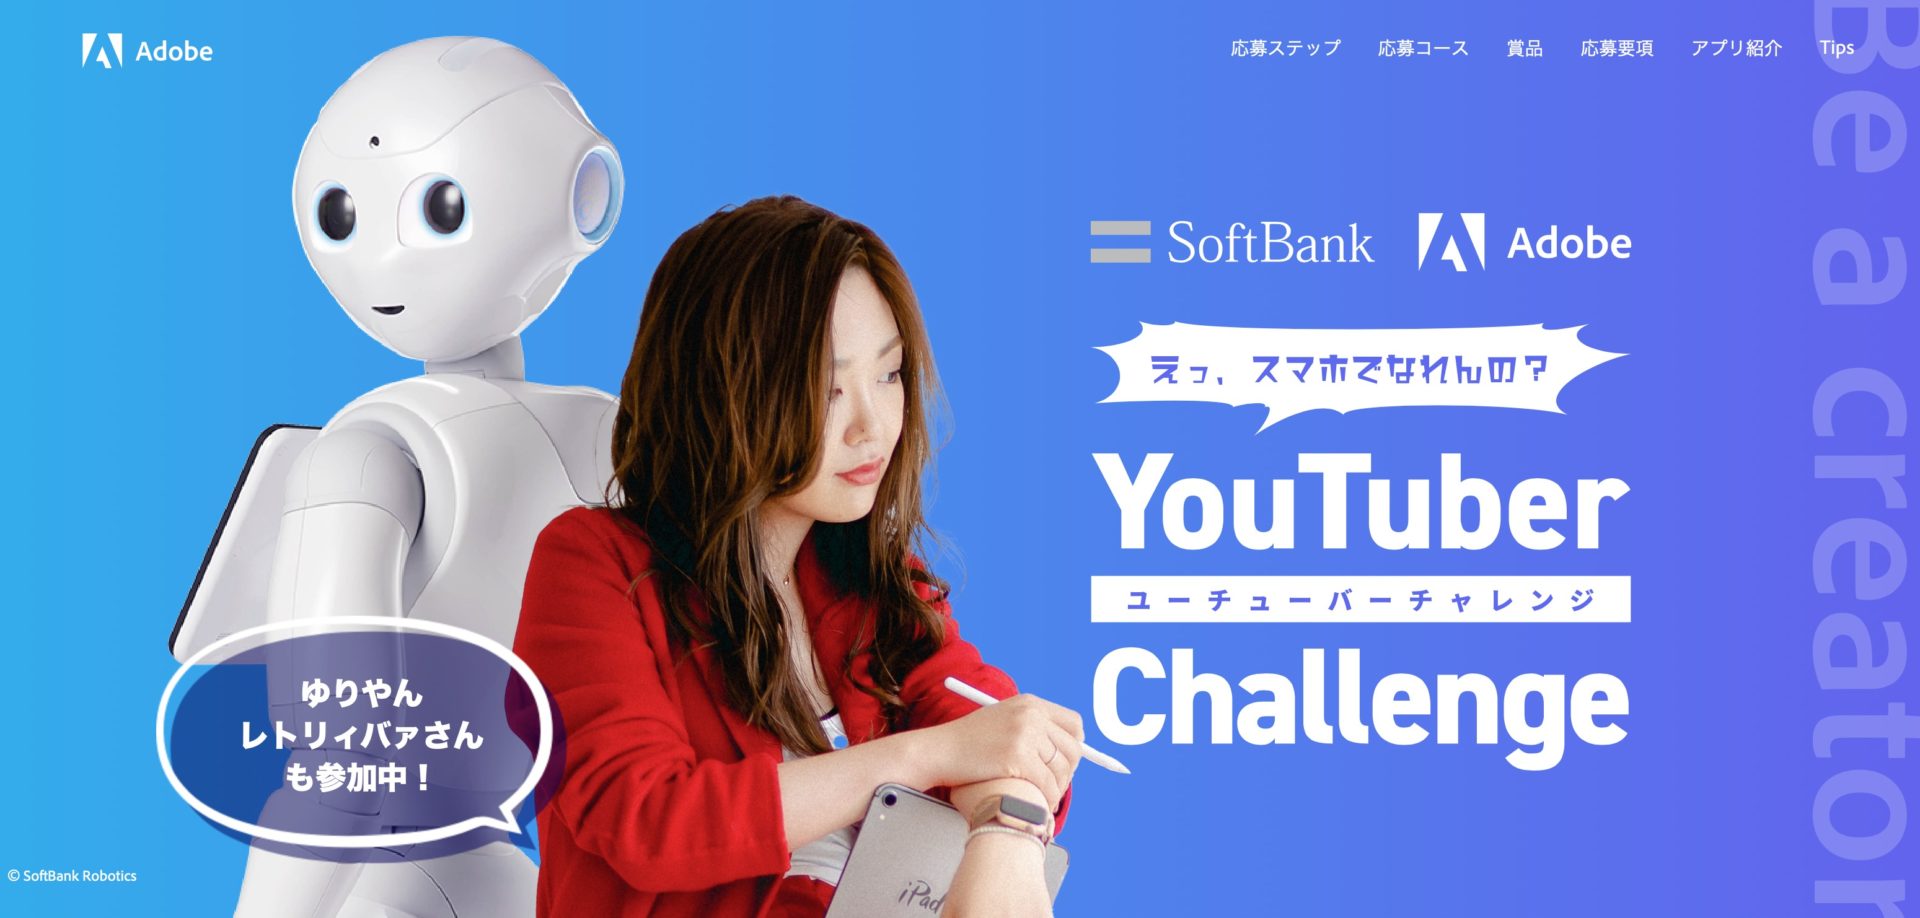 SoftBank Adobe presents YouTuberチャレンジのサムネイル画像